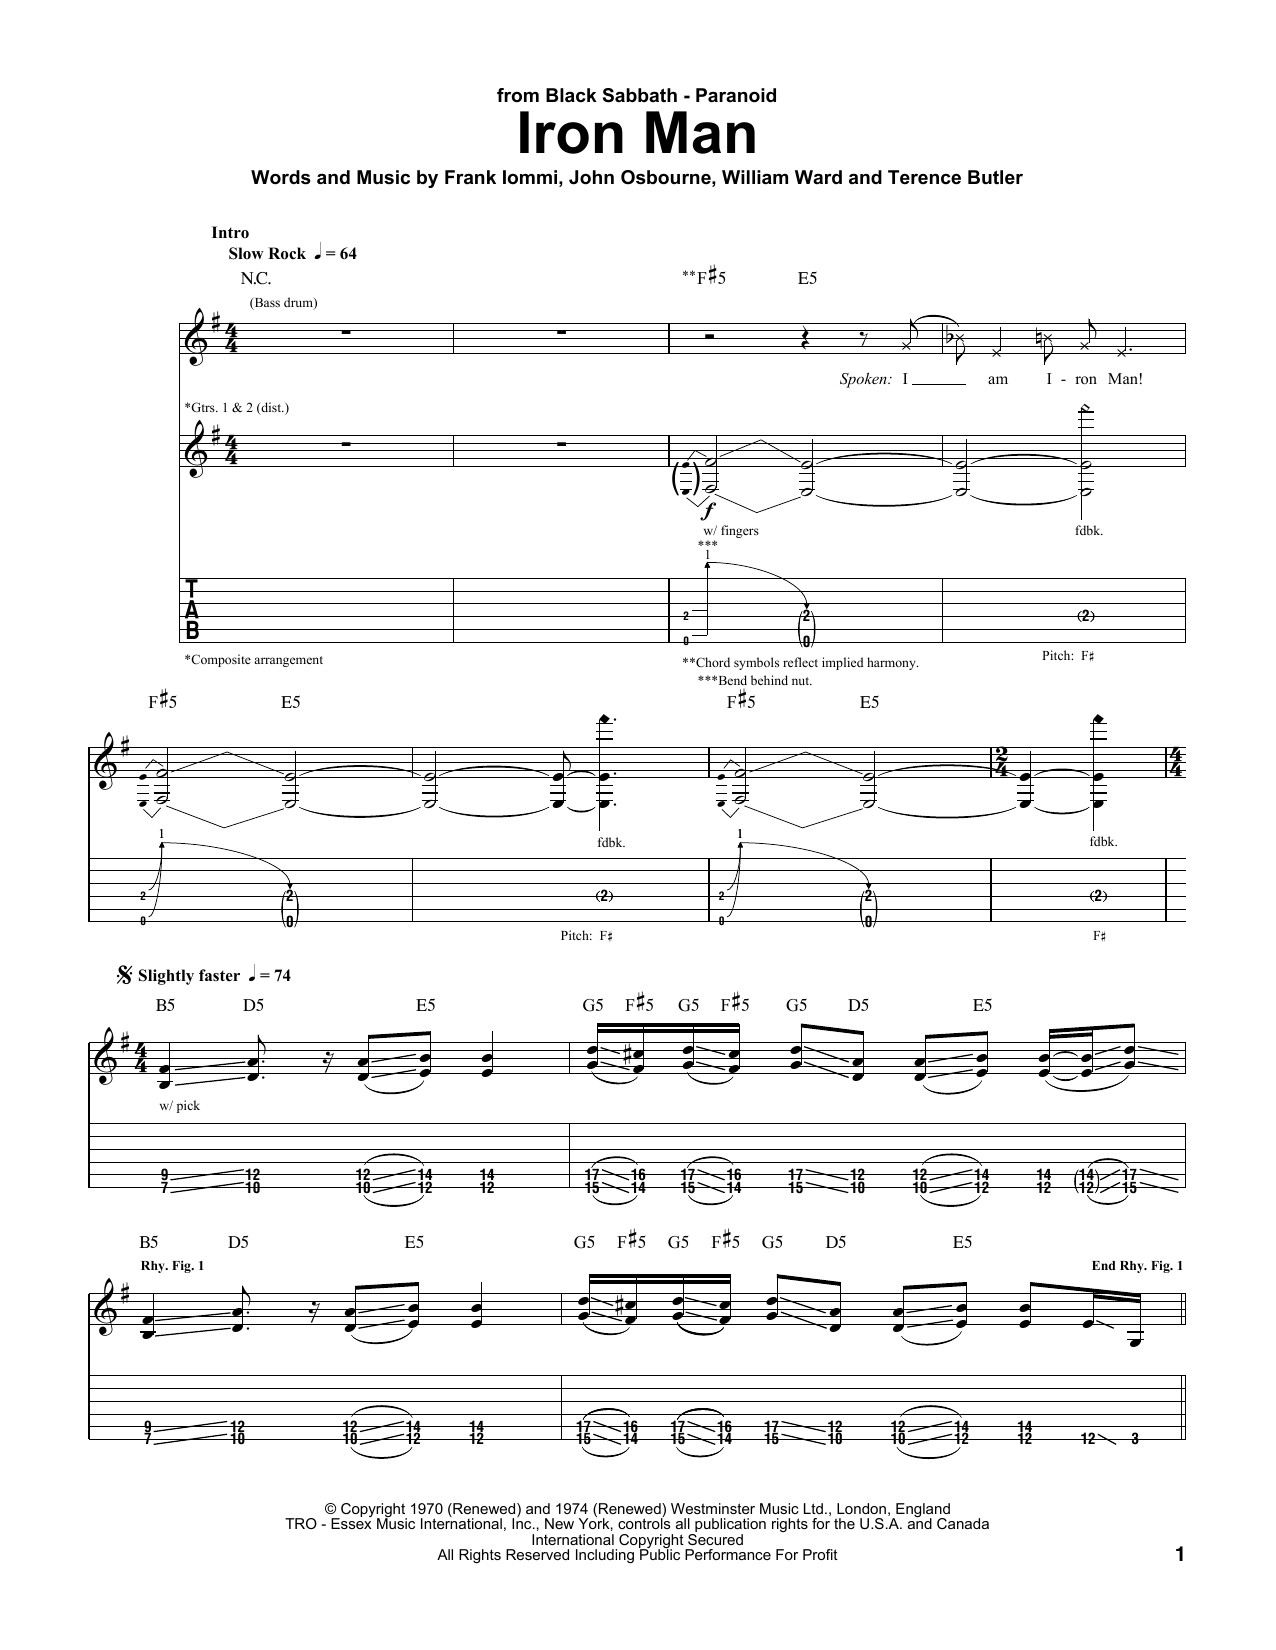 Black Sabbath Iron Man Sheet Music Notes & Chords for Ukulele with strumming patterns - Download or Print PDF